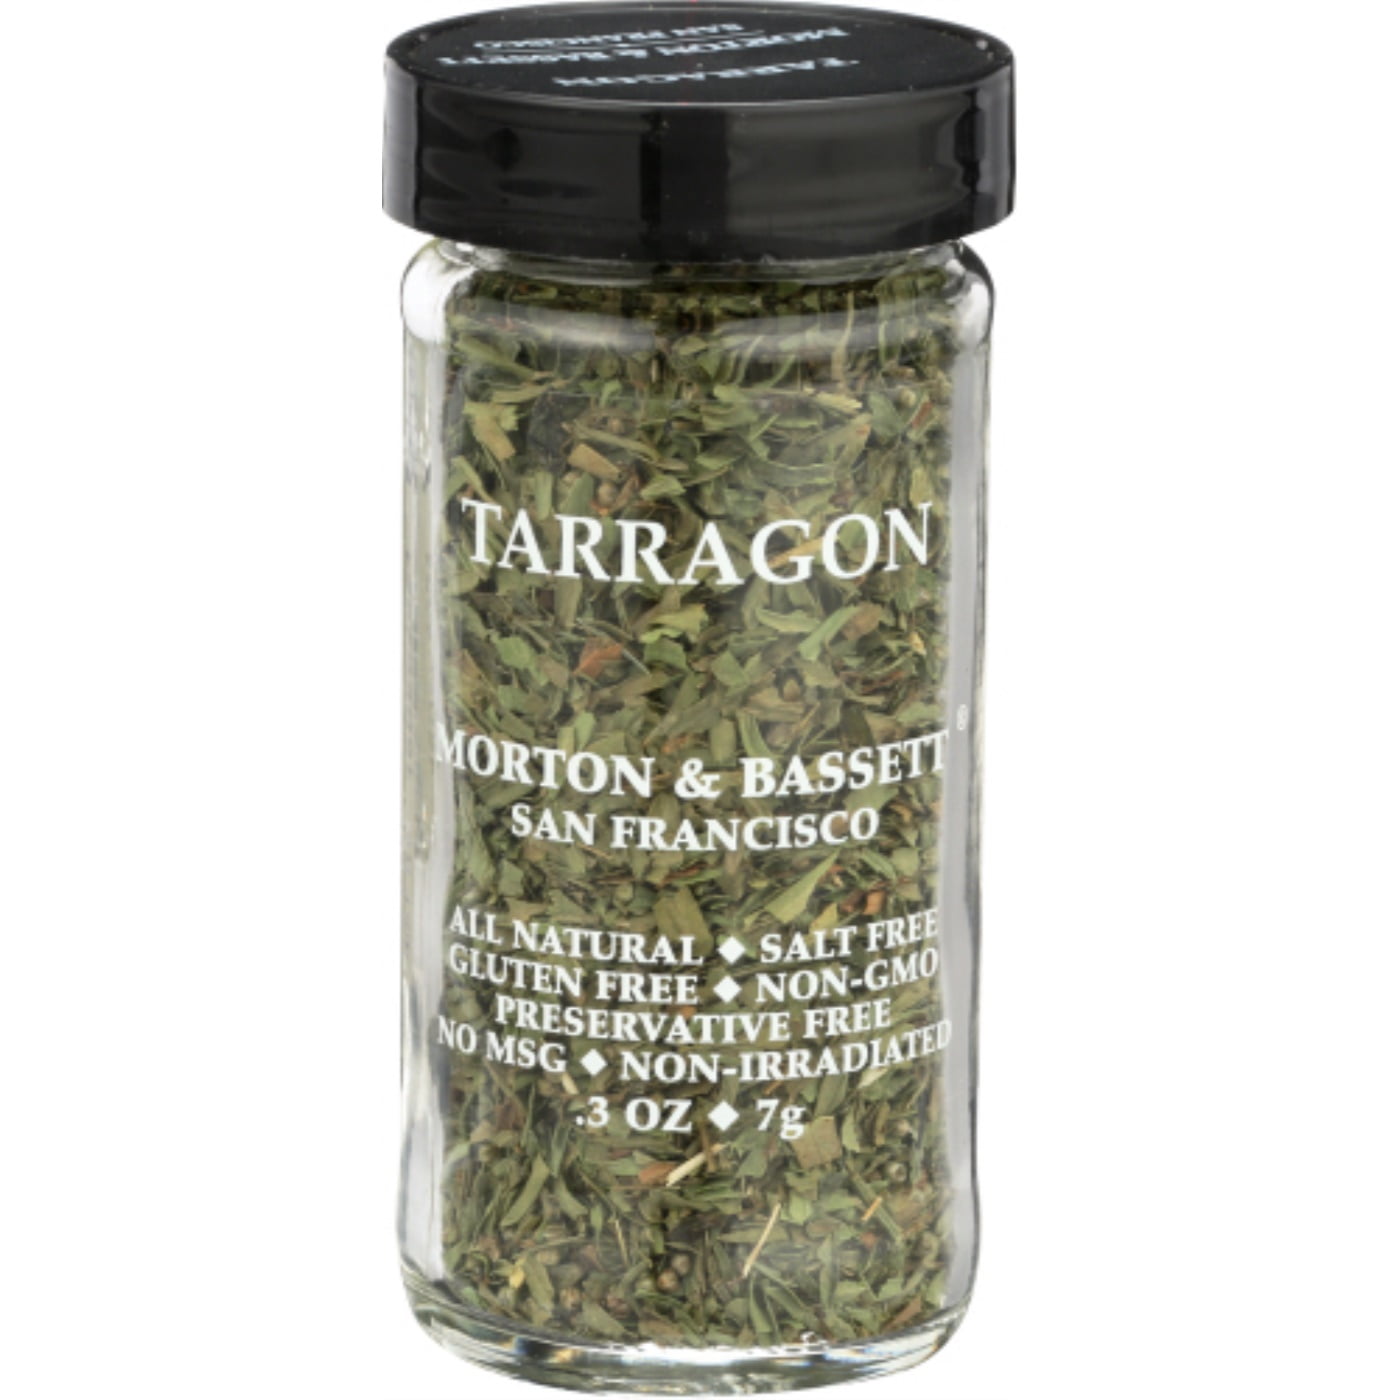 Morton & Bassett Tarragon 0.3 Oz Jar